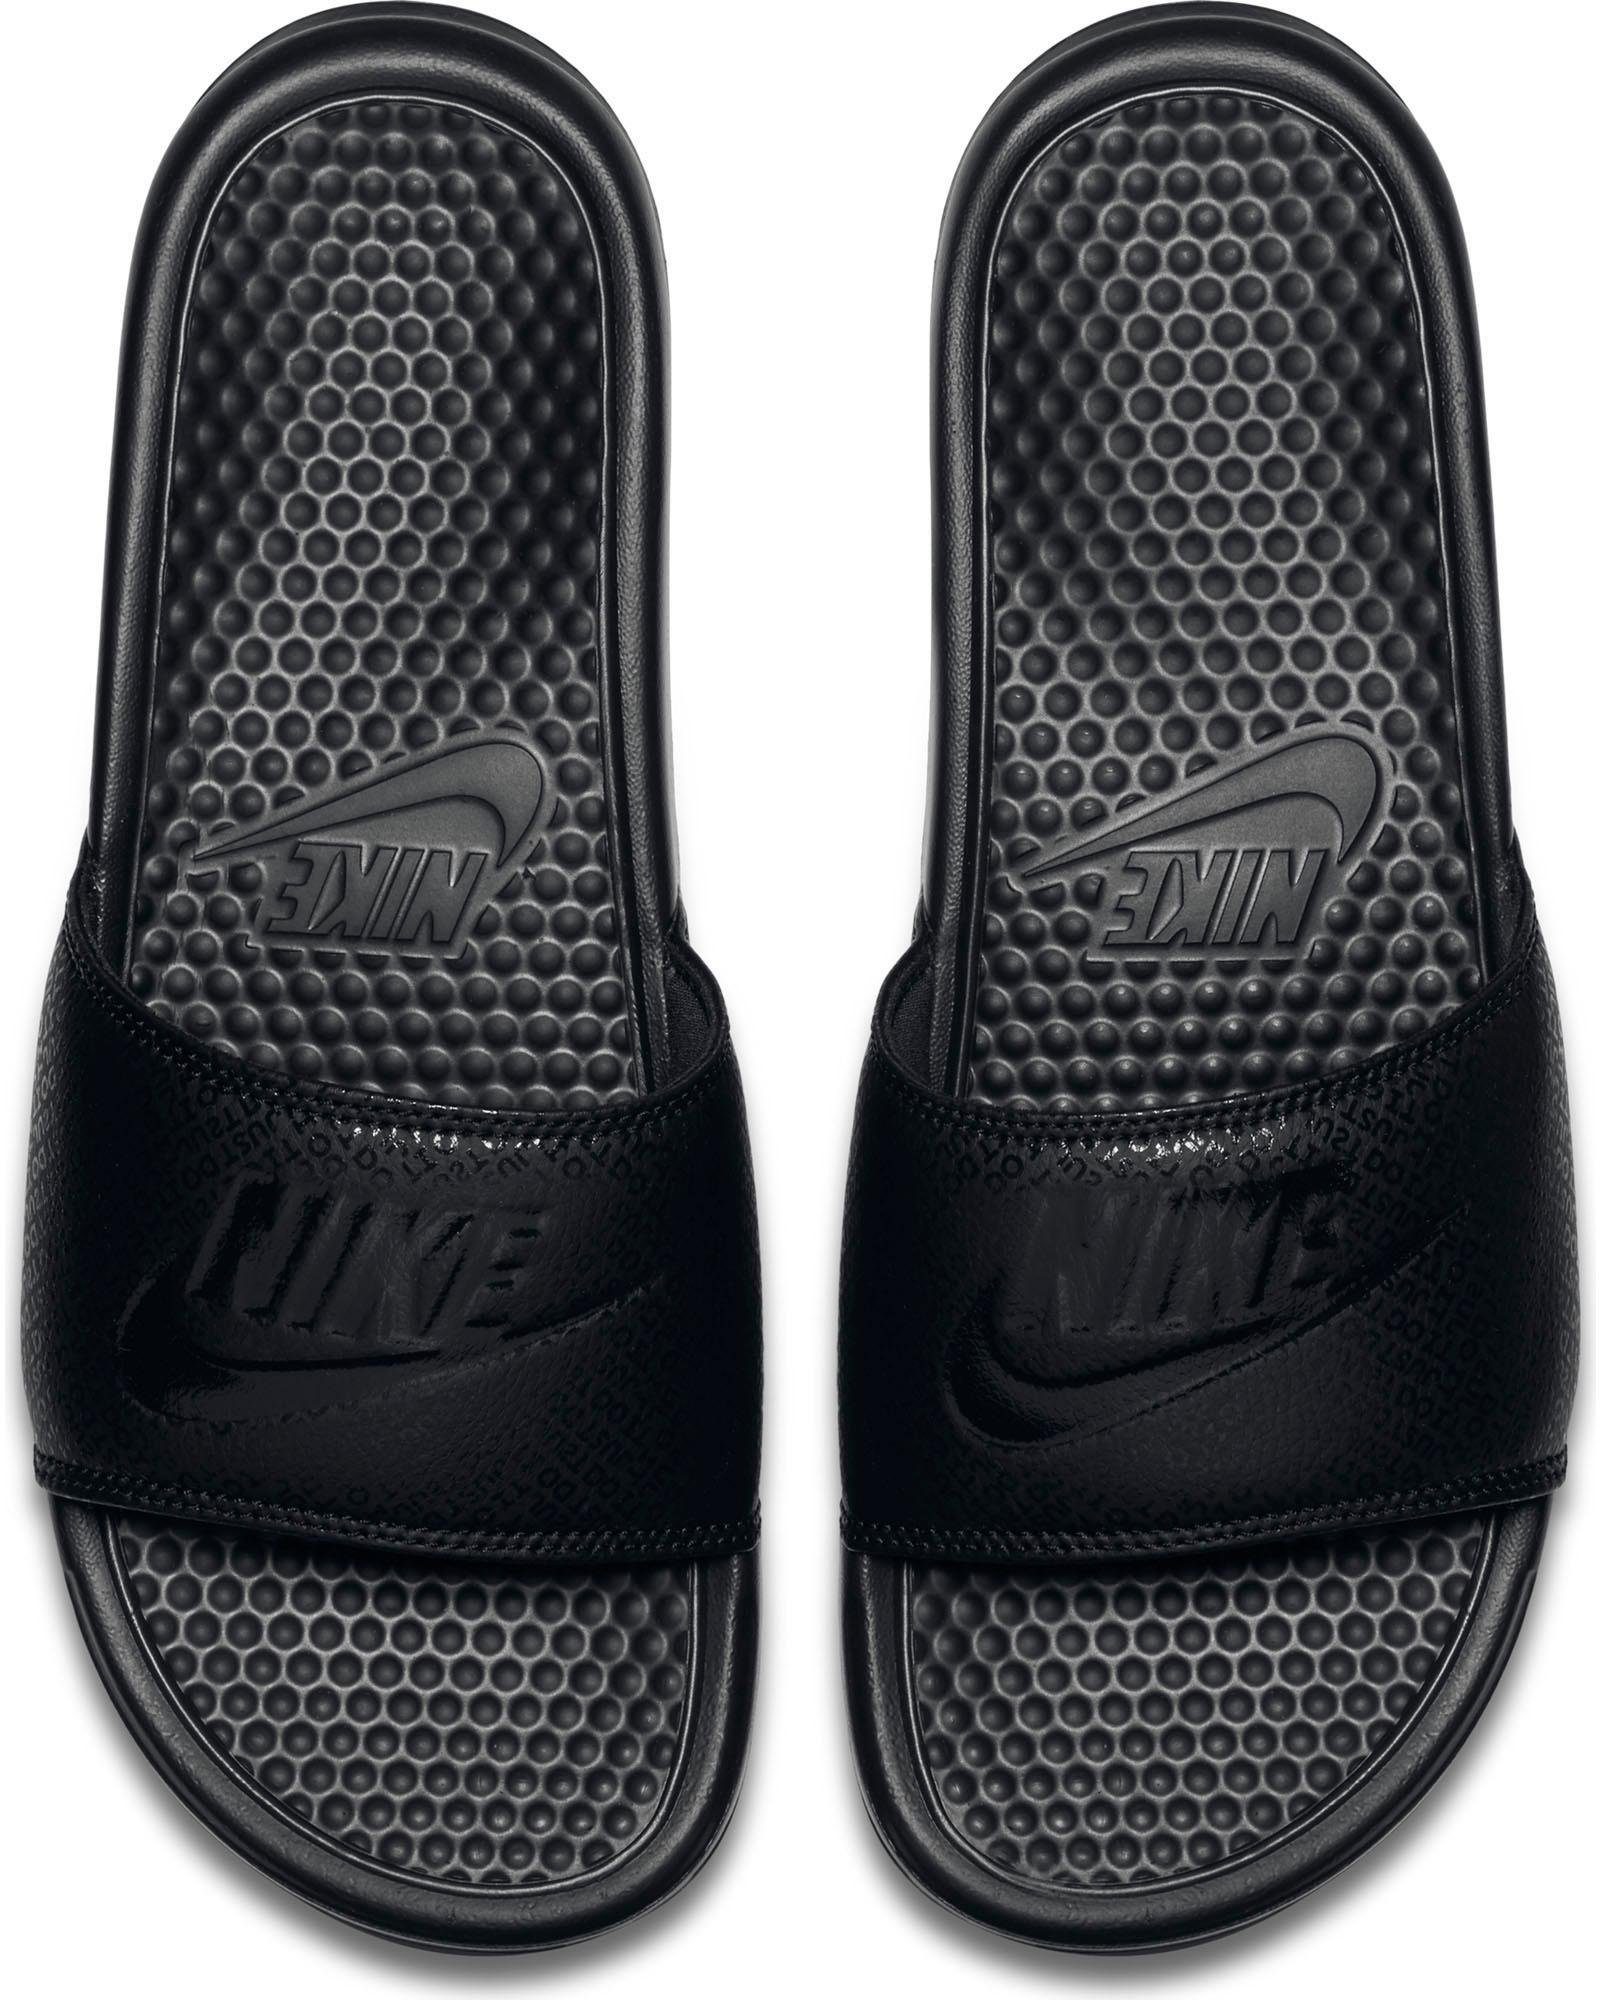 Nike Sportswear »Benassi Just do it« Badesandale | OTTO